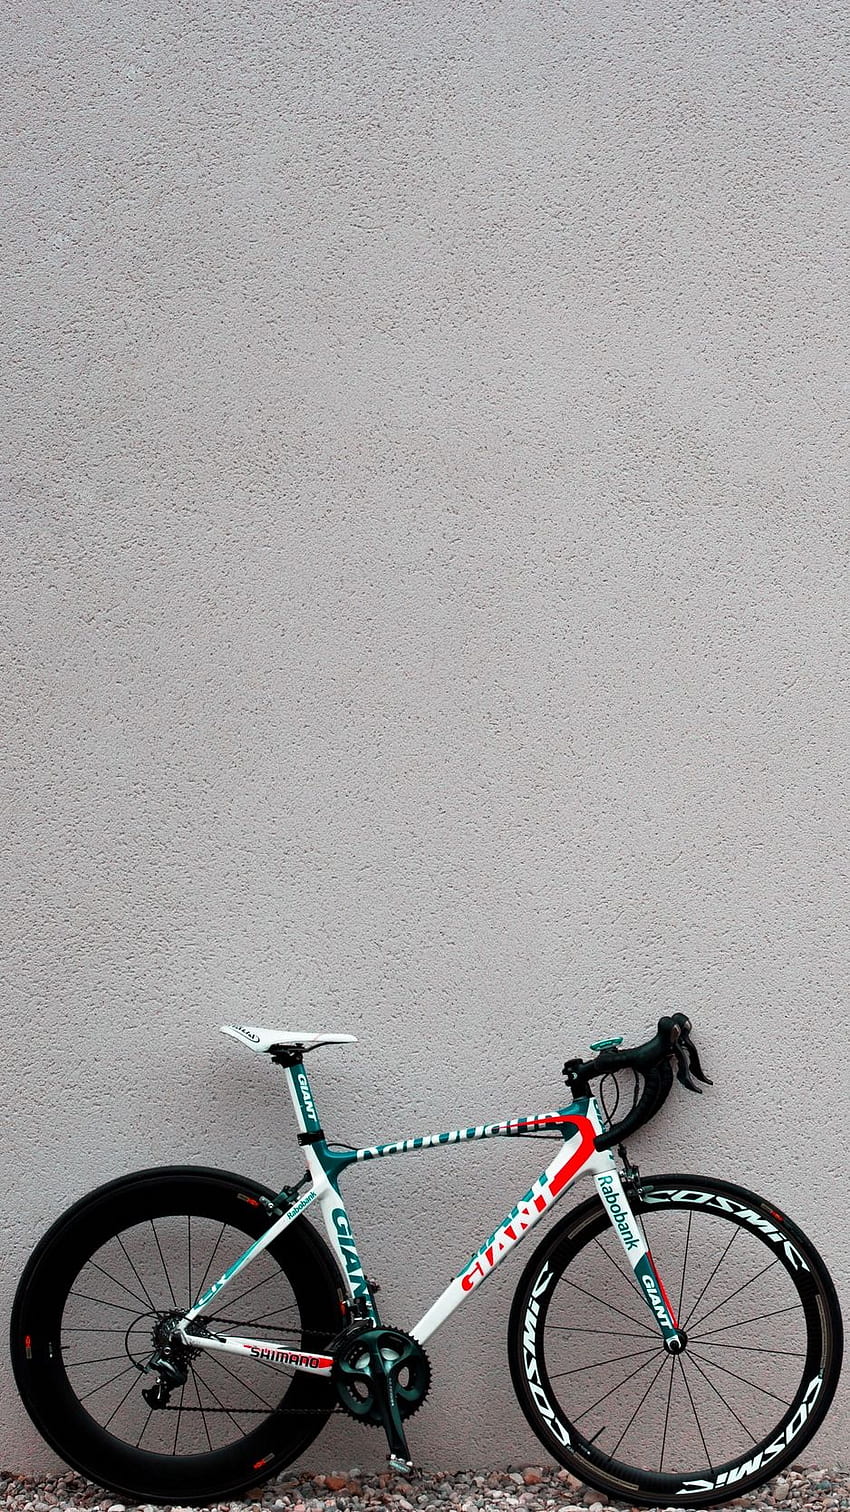 Cycling iPhone HD phone wallpaper